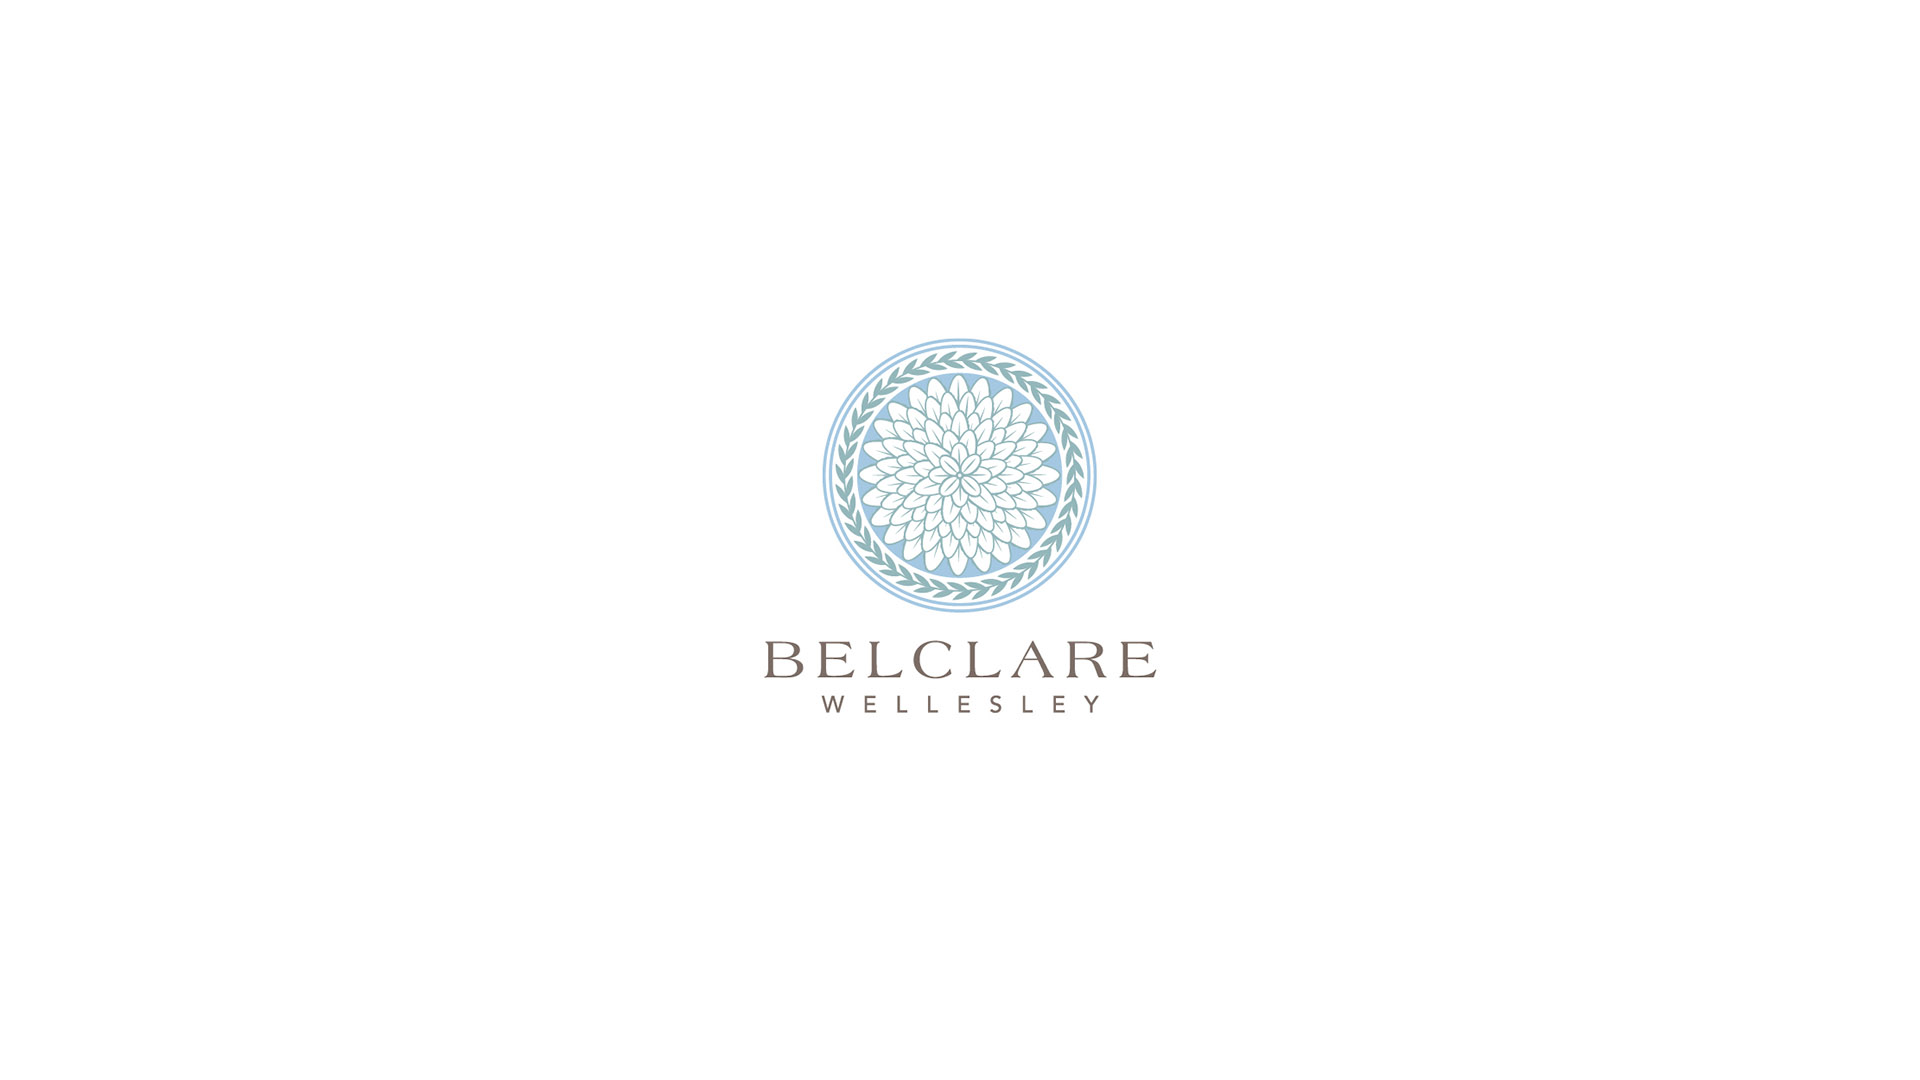 belclare wellesley logo on white